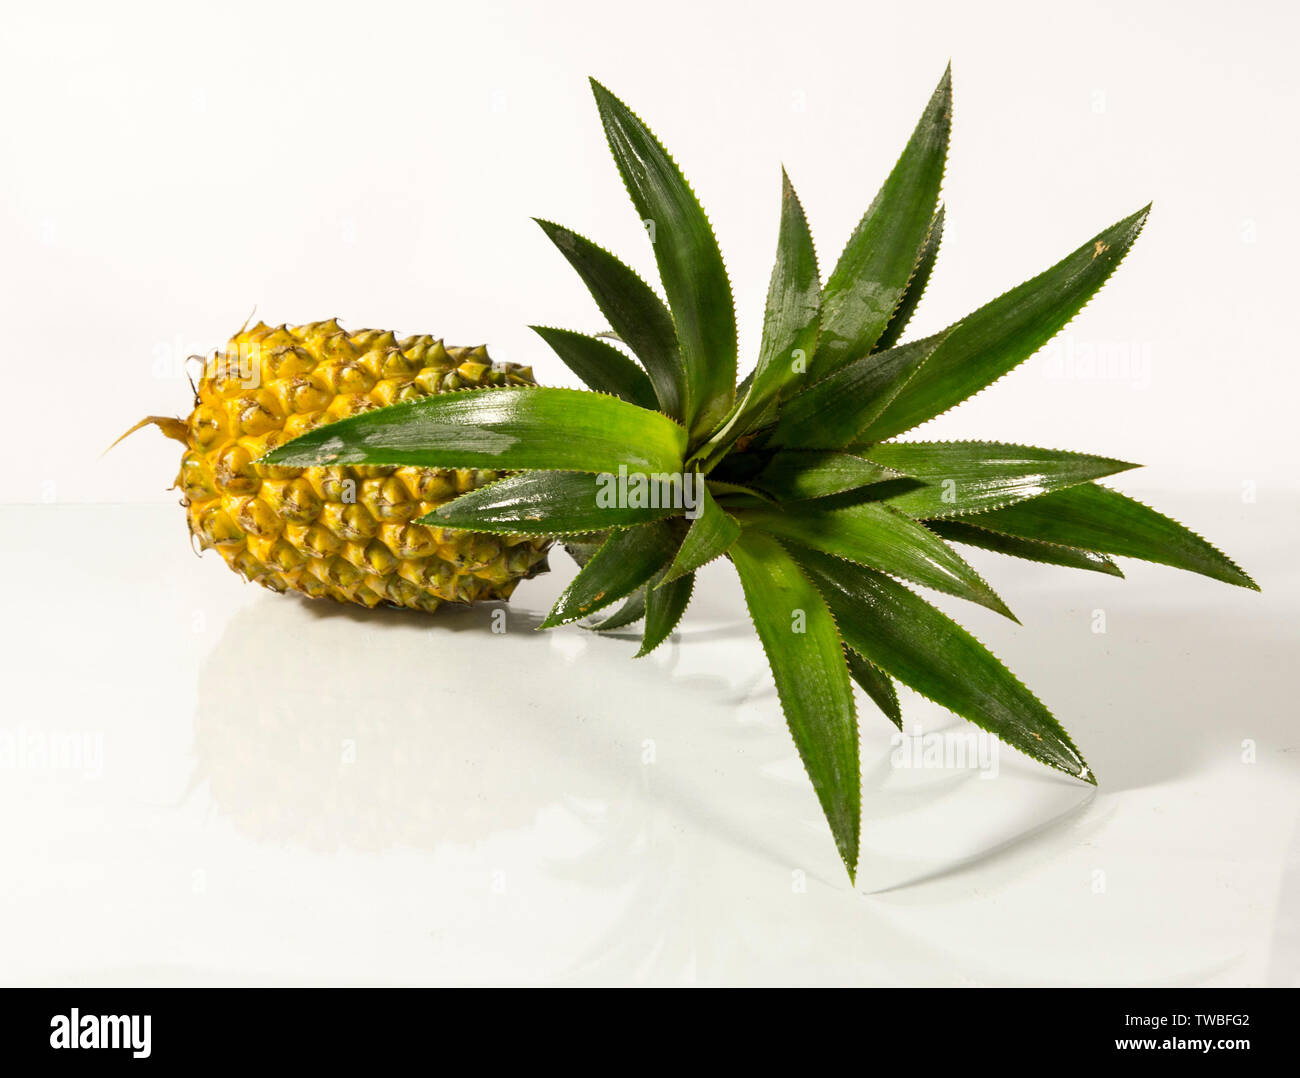 'Fruits of Bangladesh' on Pinterest. See more ideas ... Roselle (plant) - Wikipedia, the free encyclopedia Cash Crop, Antonio Garcia, .... pineapples Stock Photo